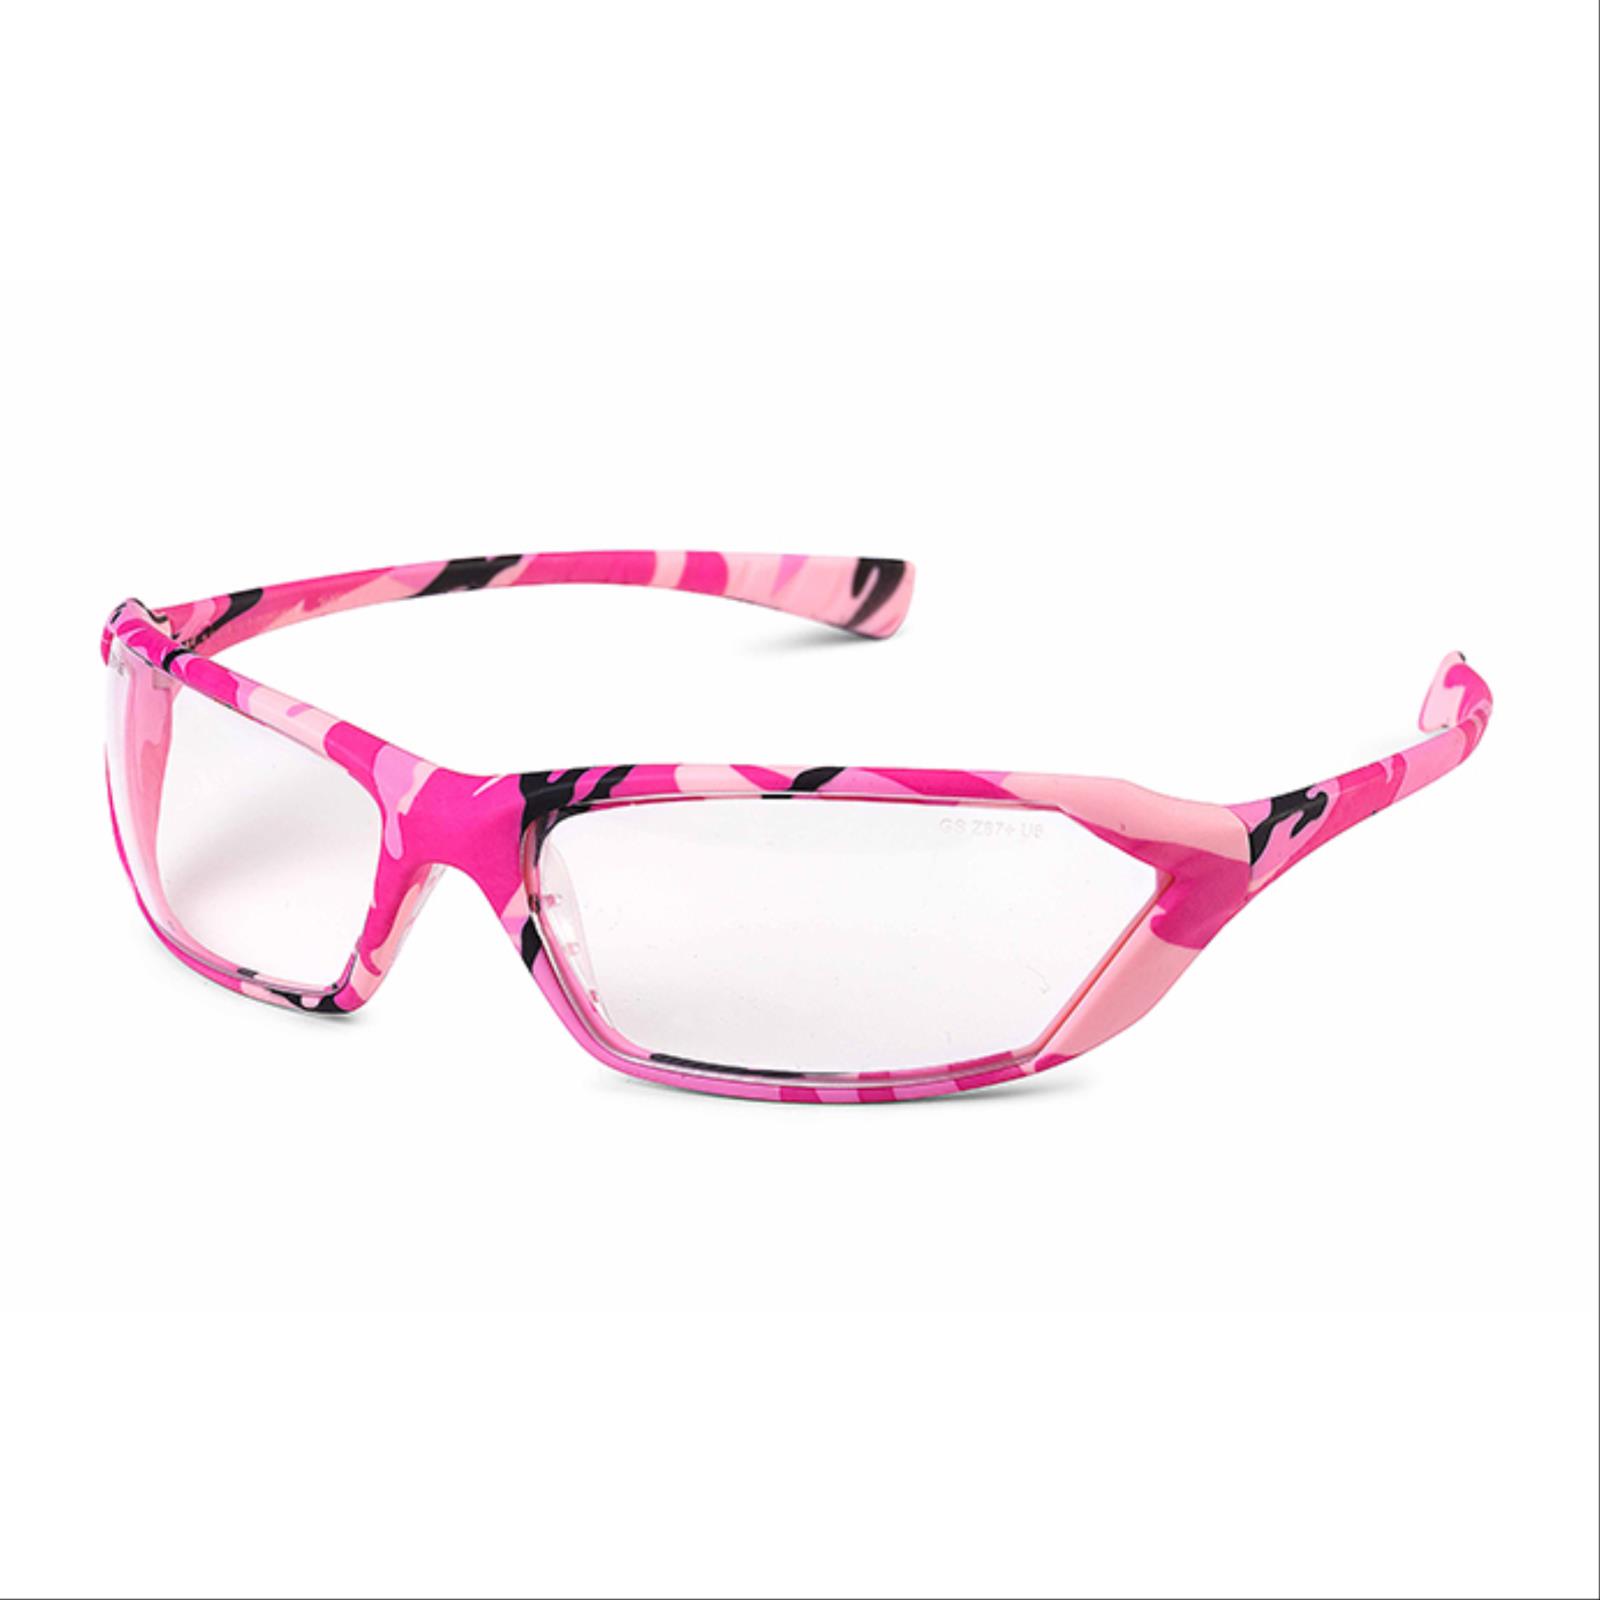 GirlzGear® Metro™ Eyewear for Women, Camo Pink